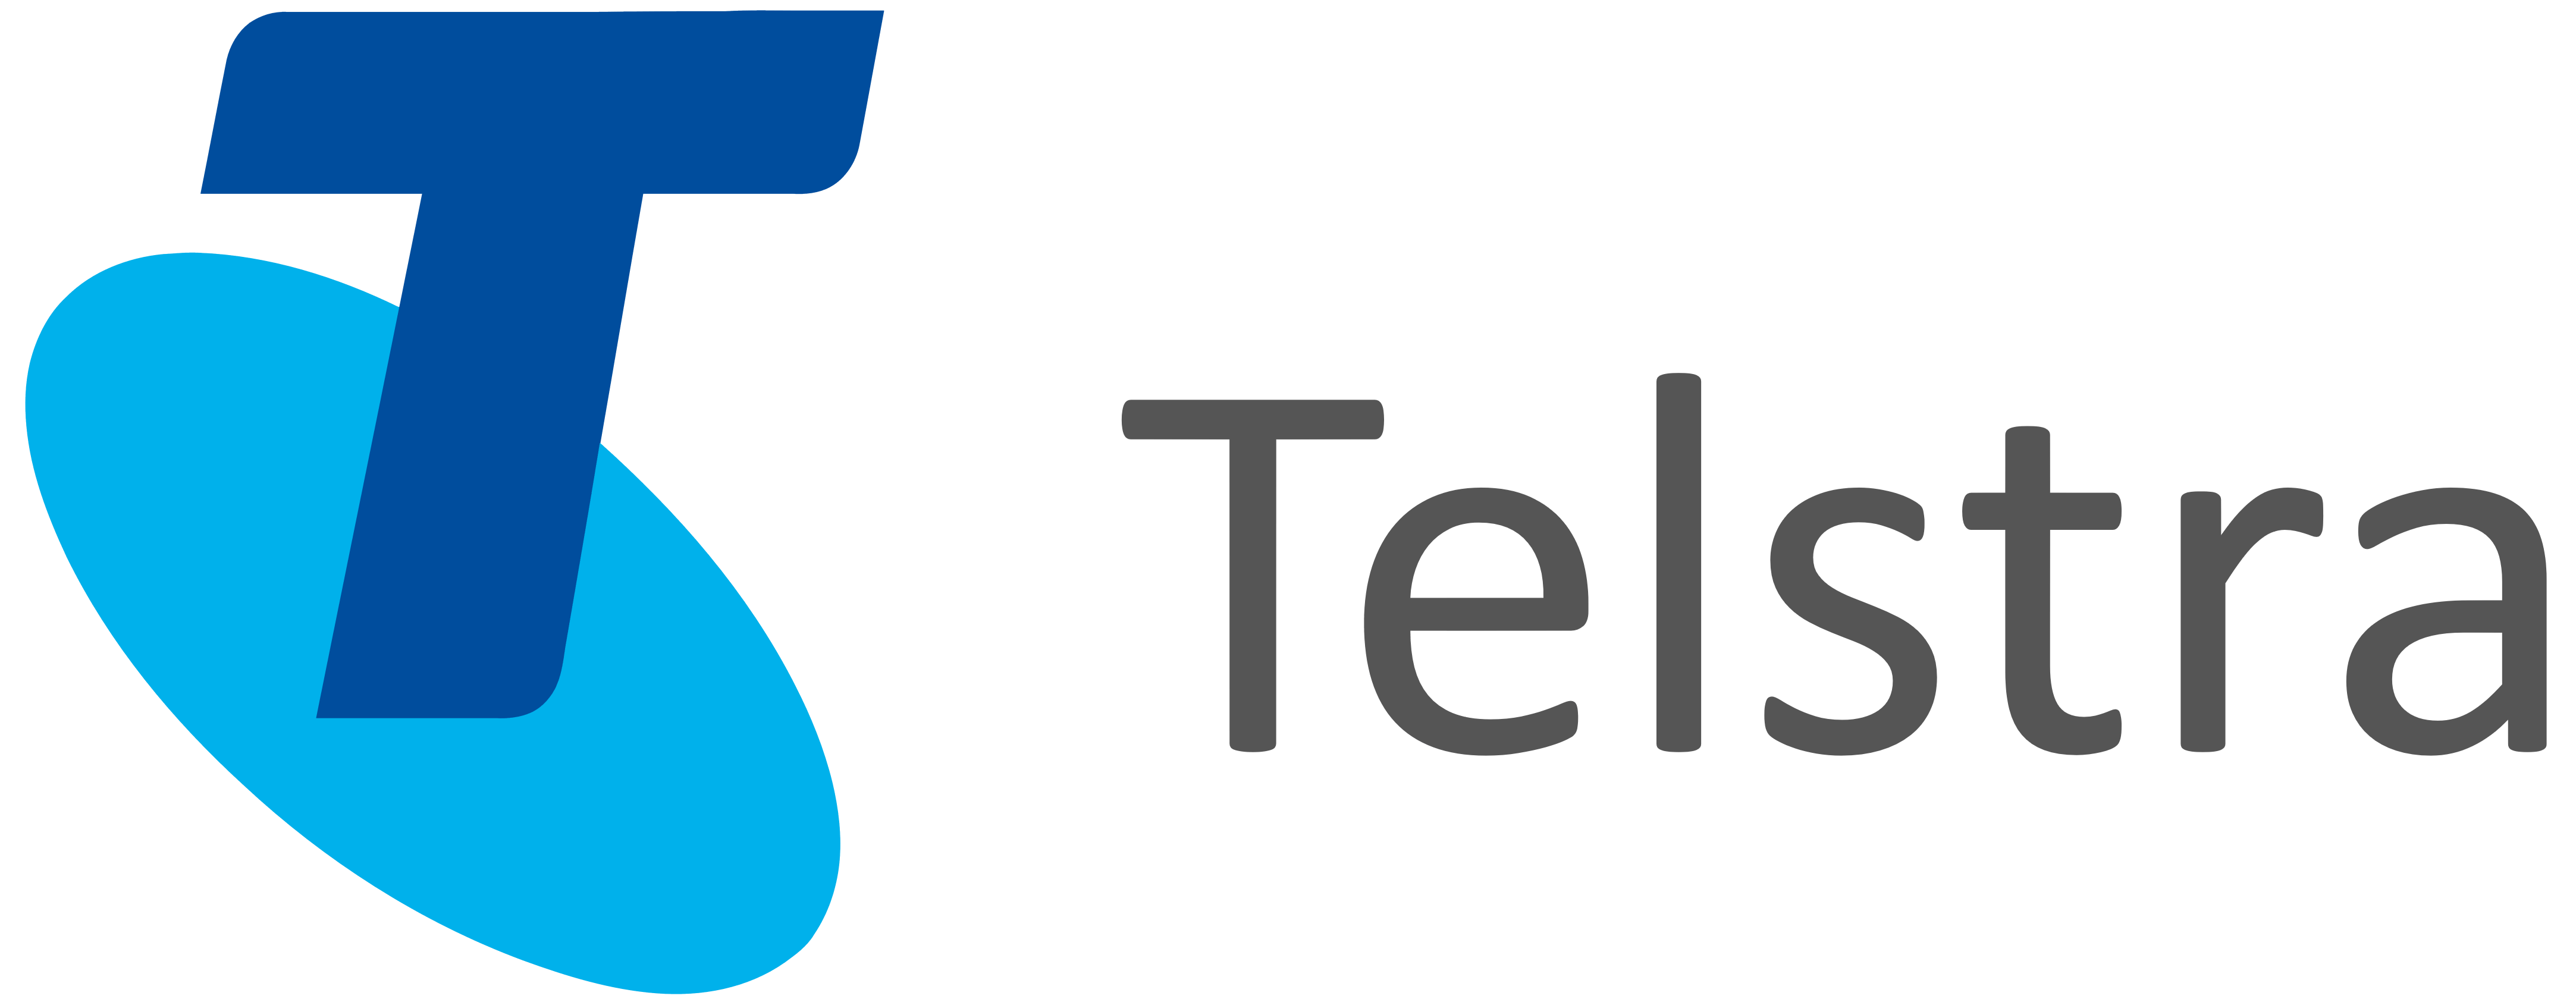 Telstra Logo - New Telstra Logo Png Latest